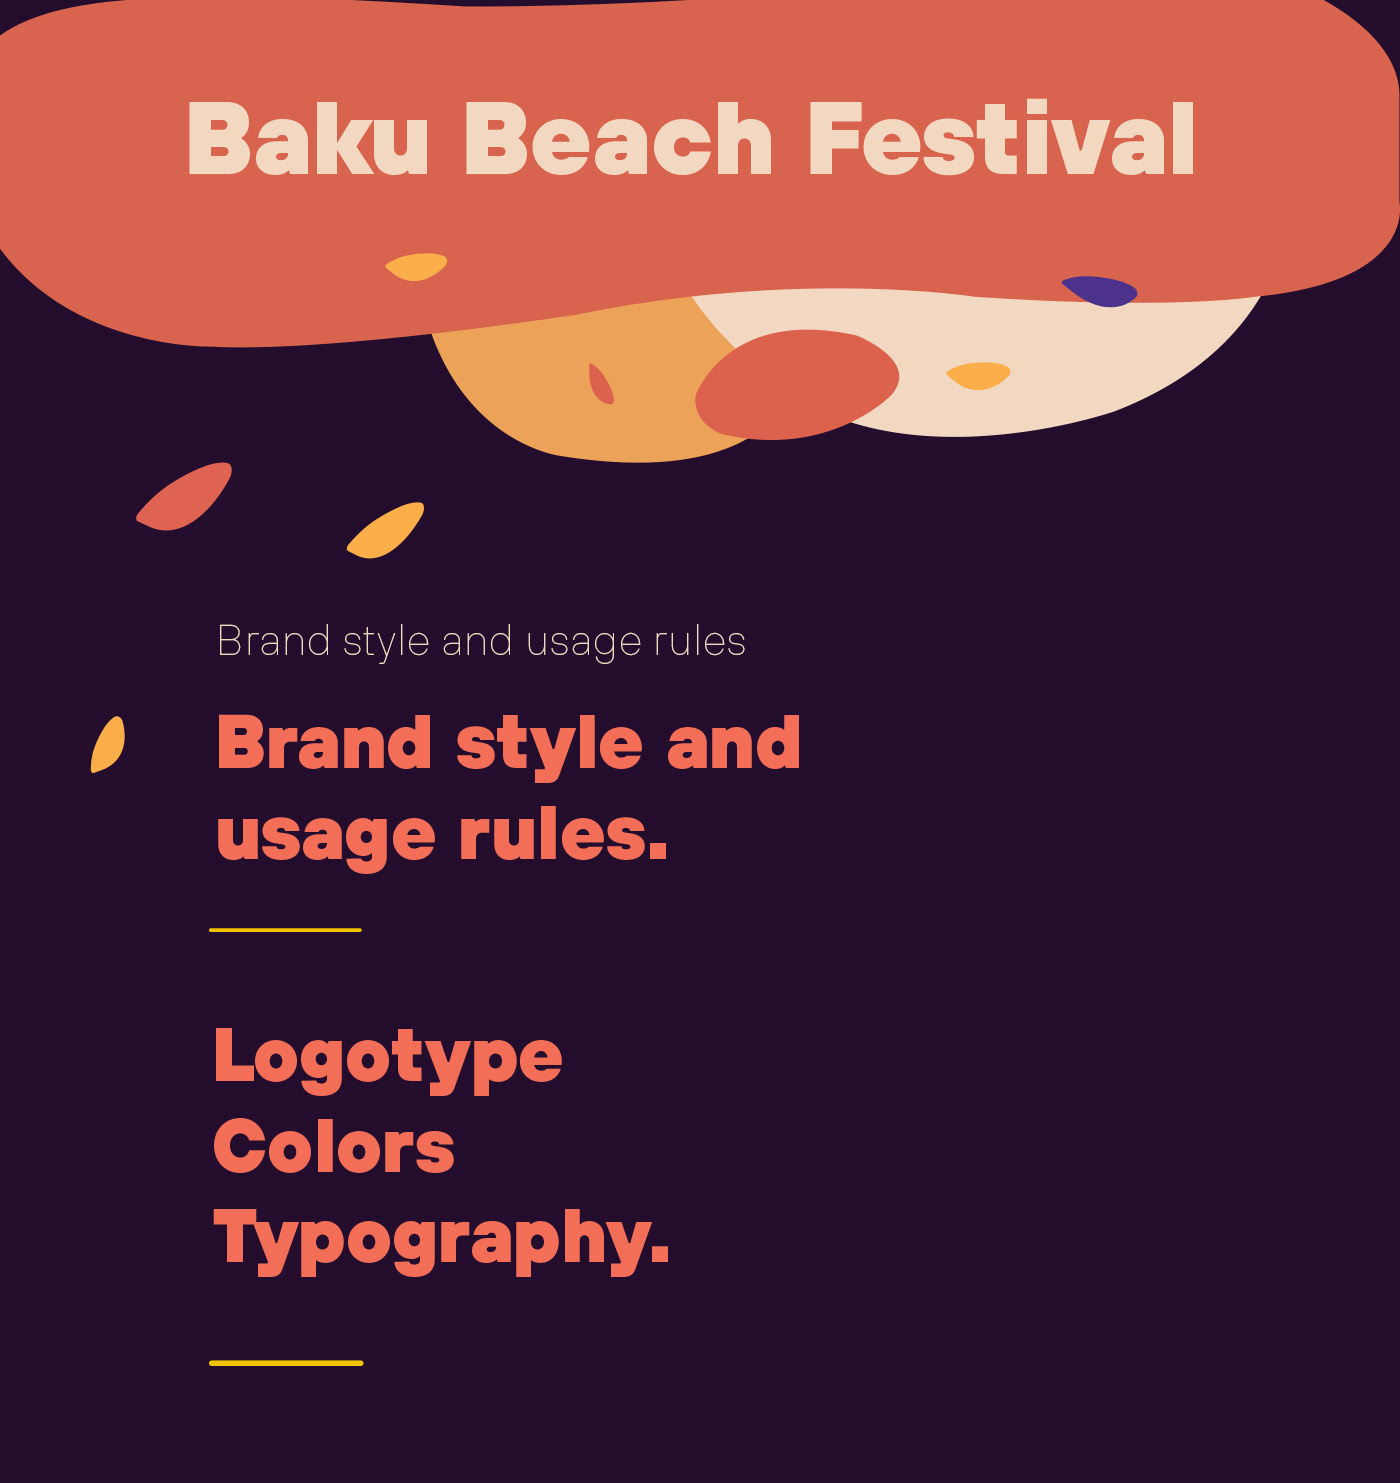 festival music colors logodesign brendbook events fesival logo Event beach poster fest